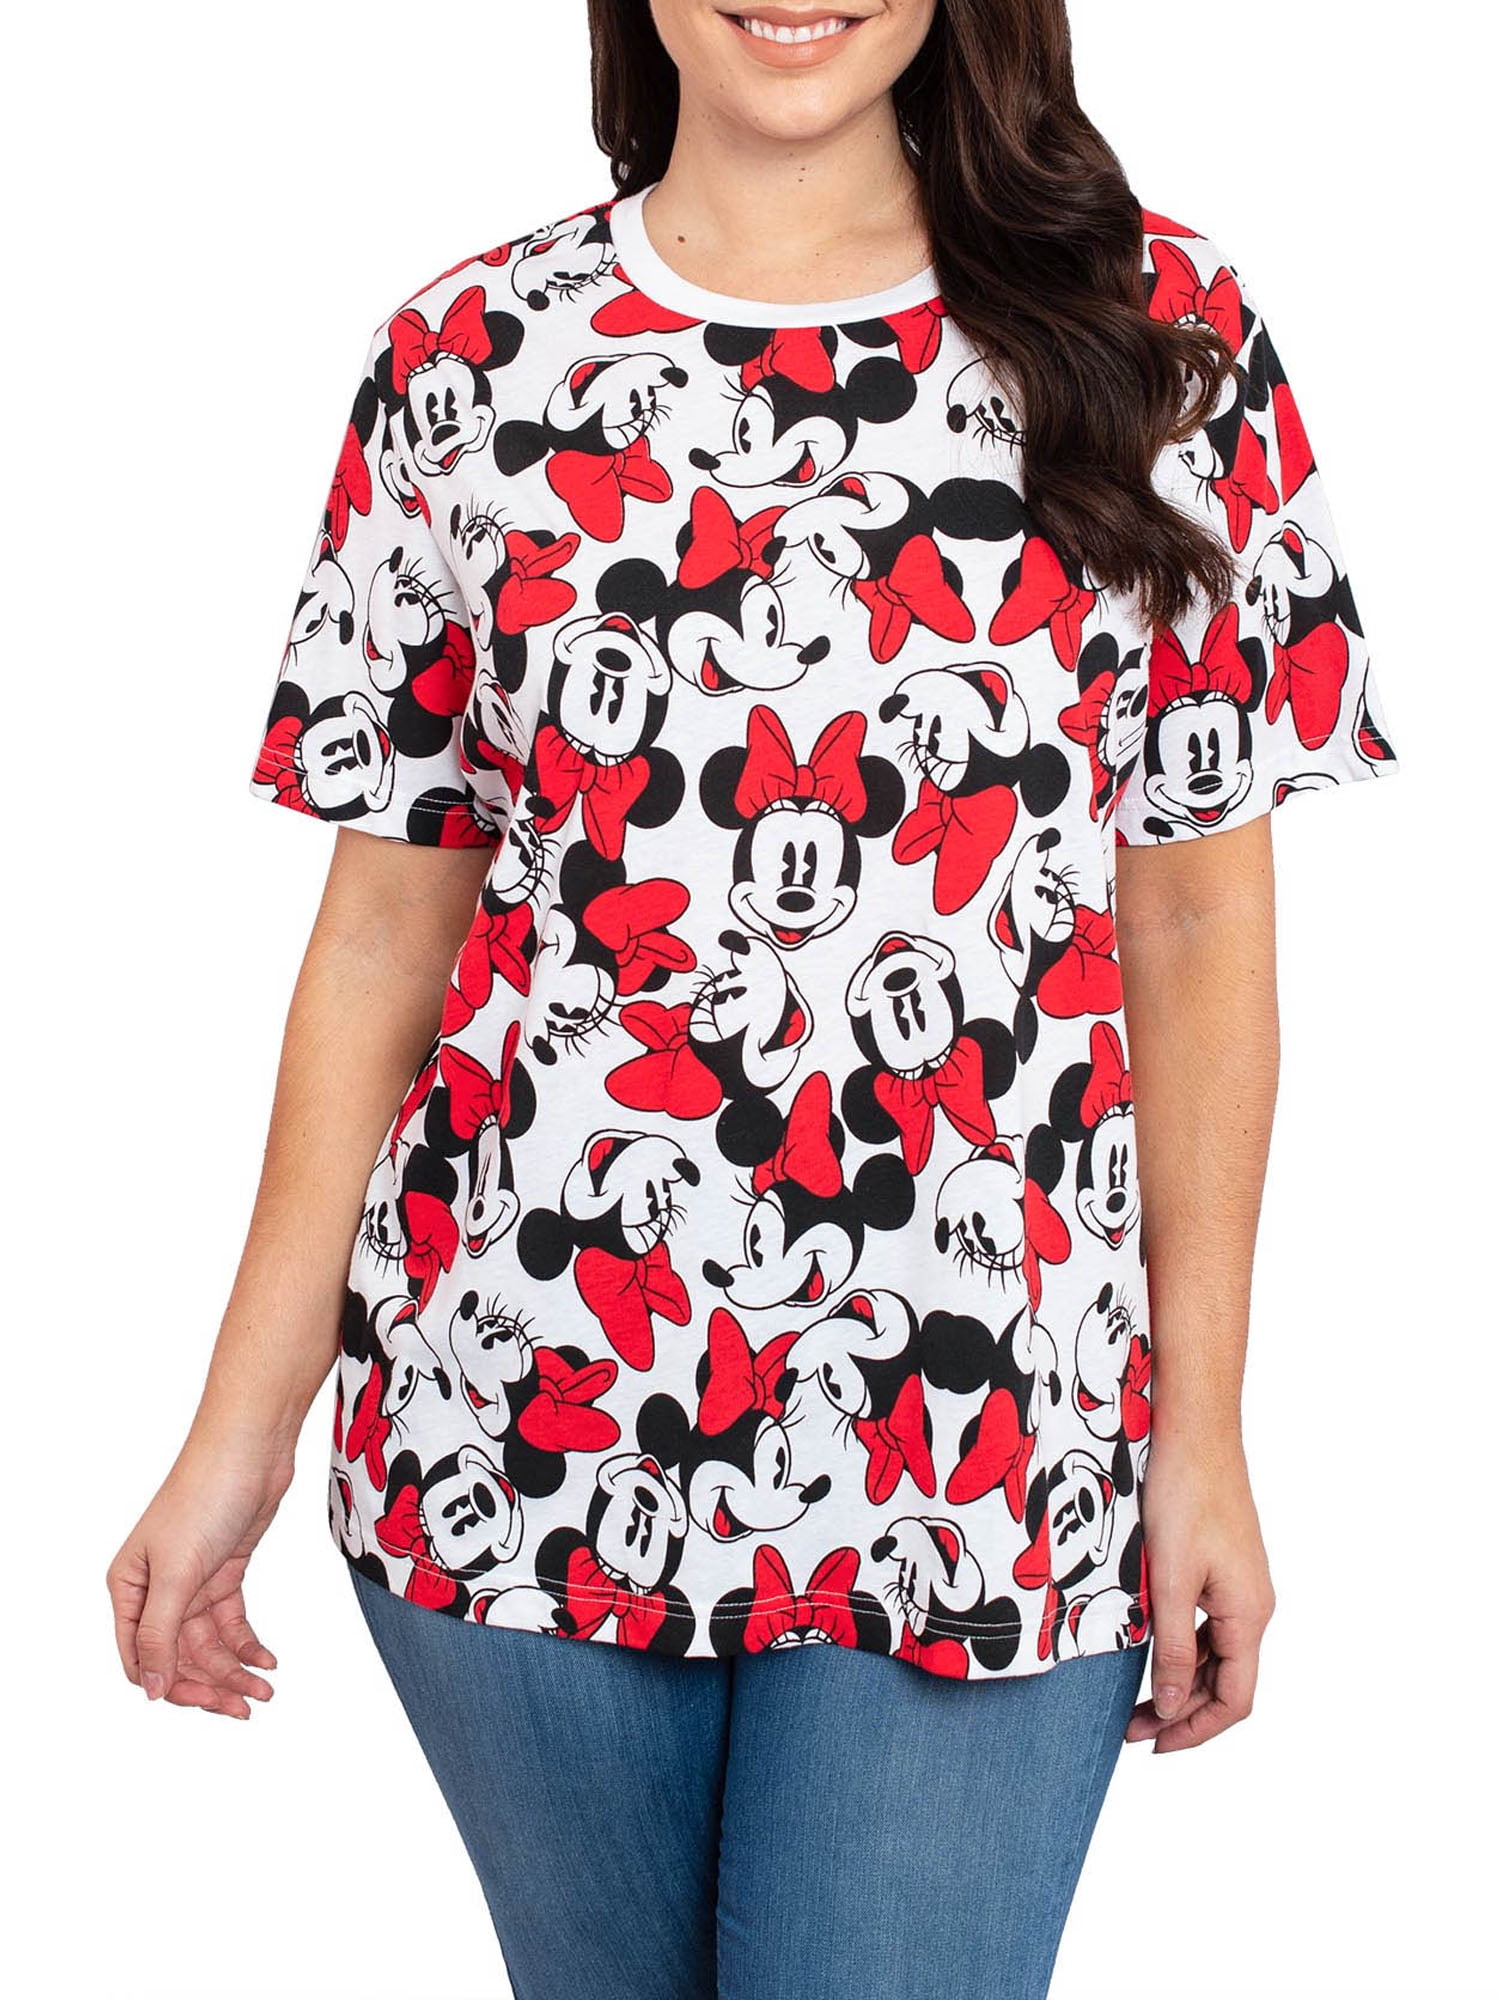 Disney Minnie Mouse Icon Striped T-Shirt for Women Multi 